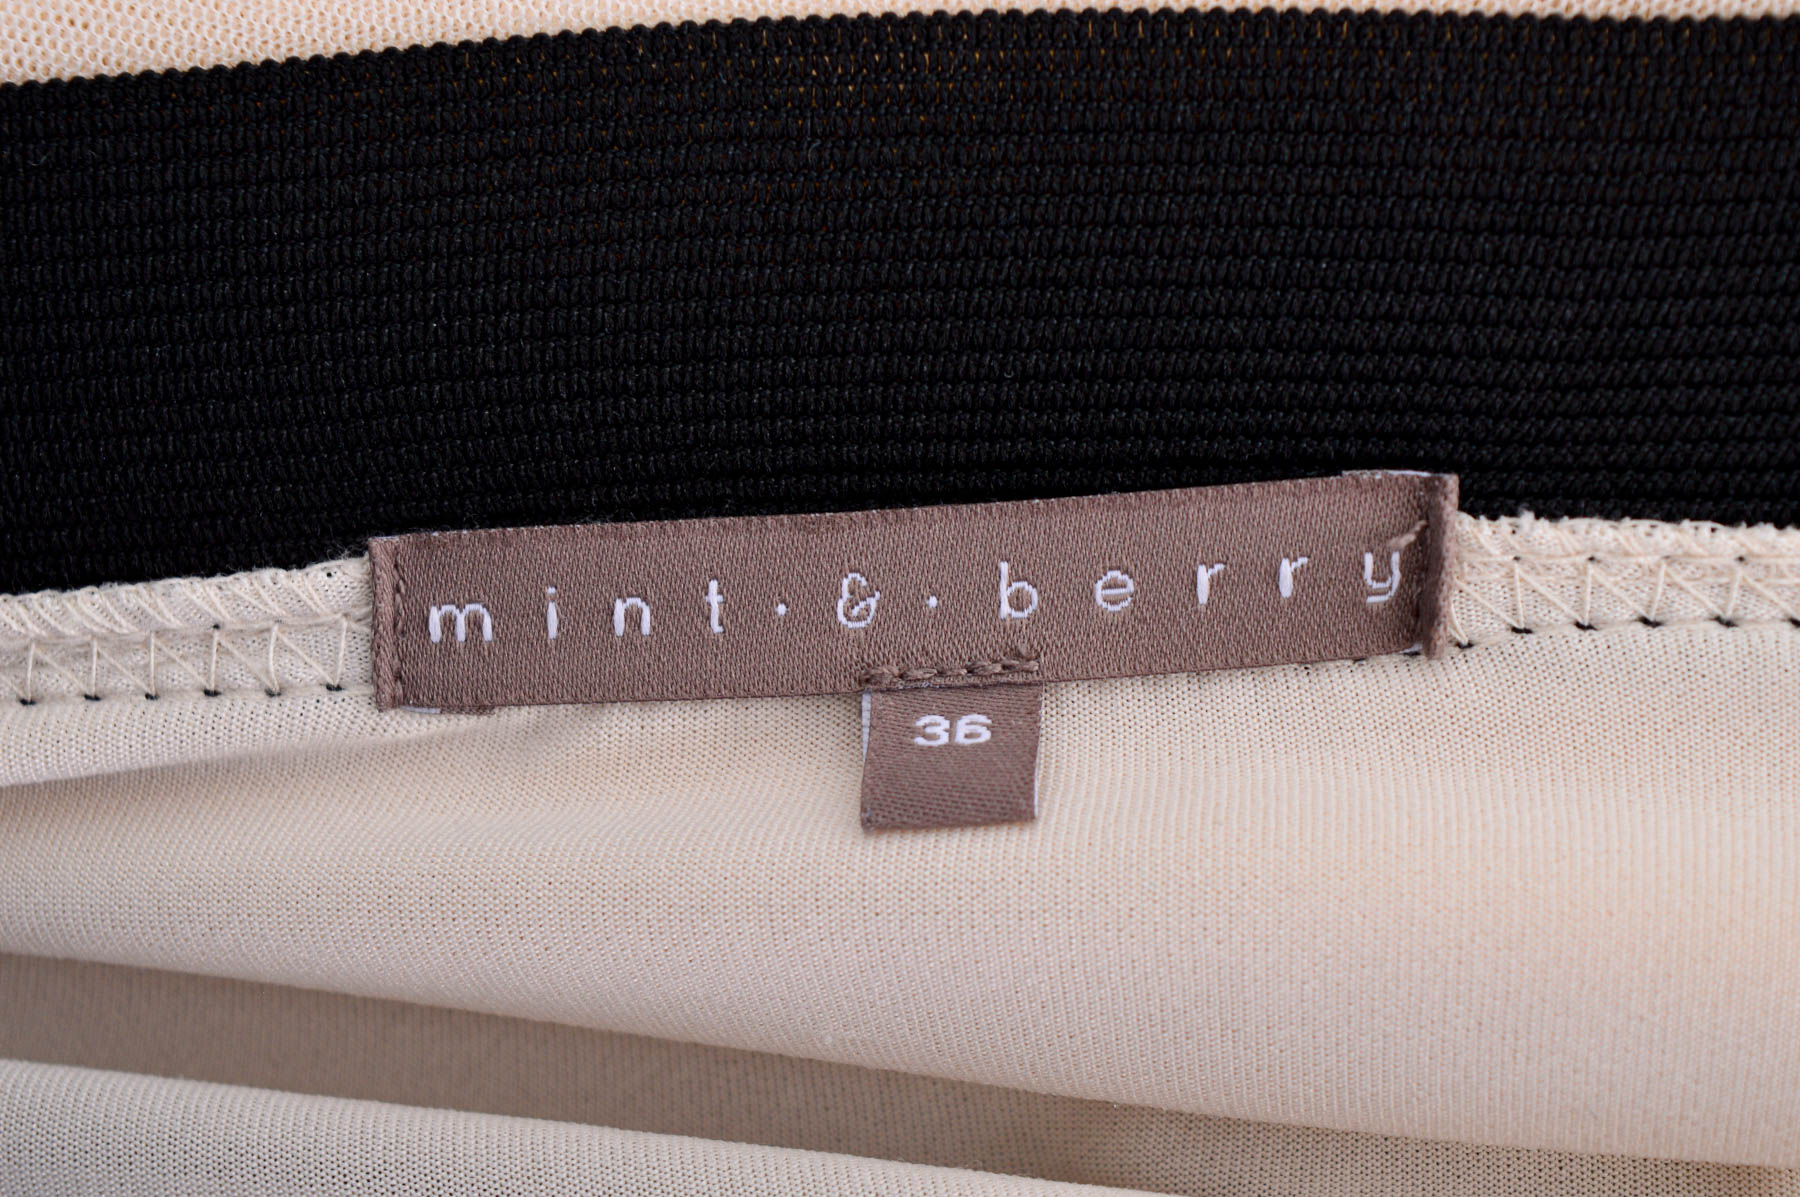 Spódnica - Mint & Berry - 2